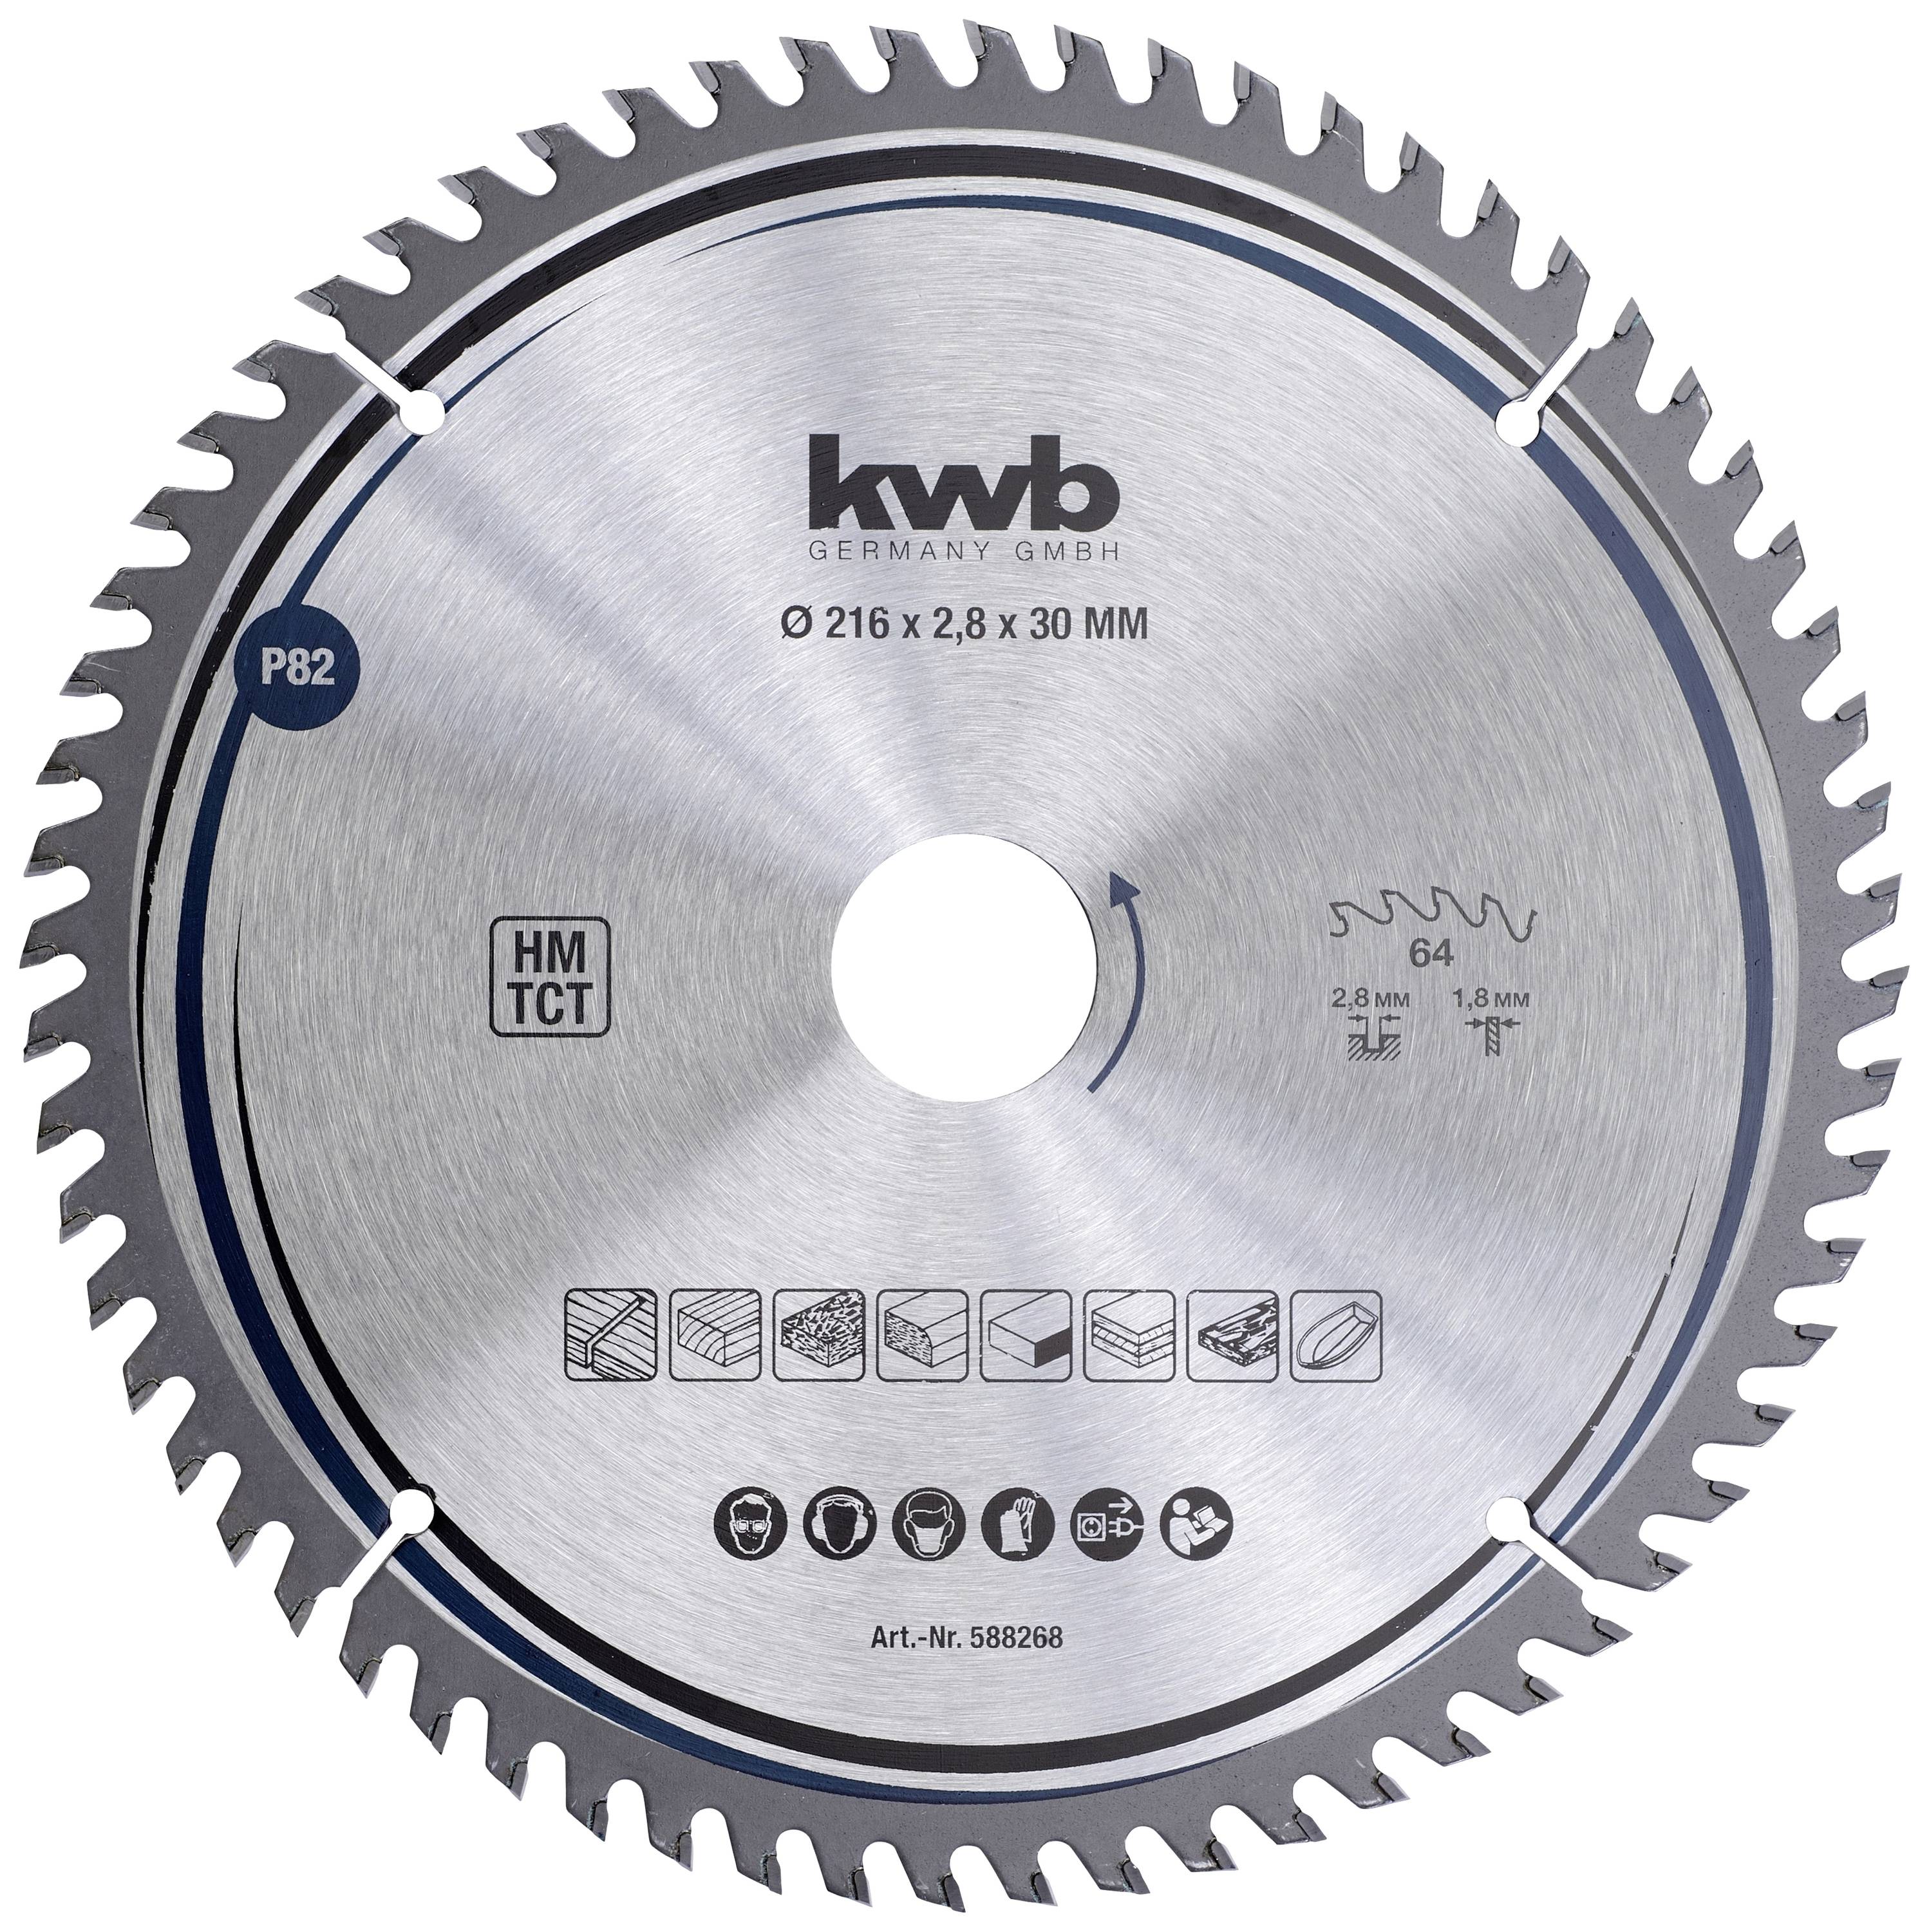 kwb saw pc(s) Electronic mm blade 588268 1 | Conrad Circular Buy x 216 30